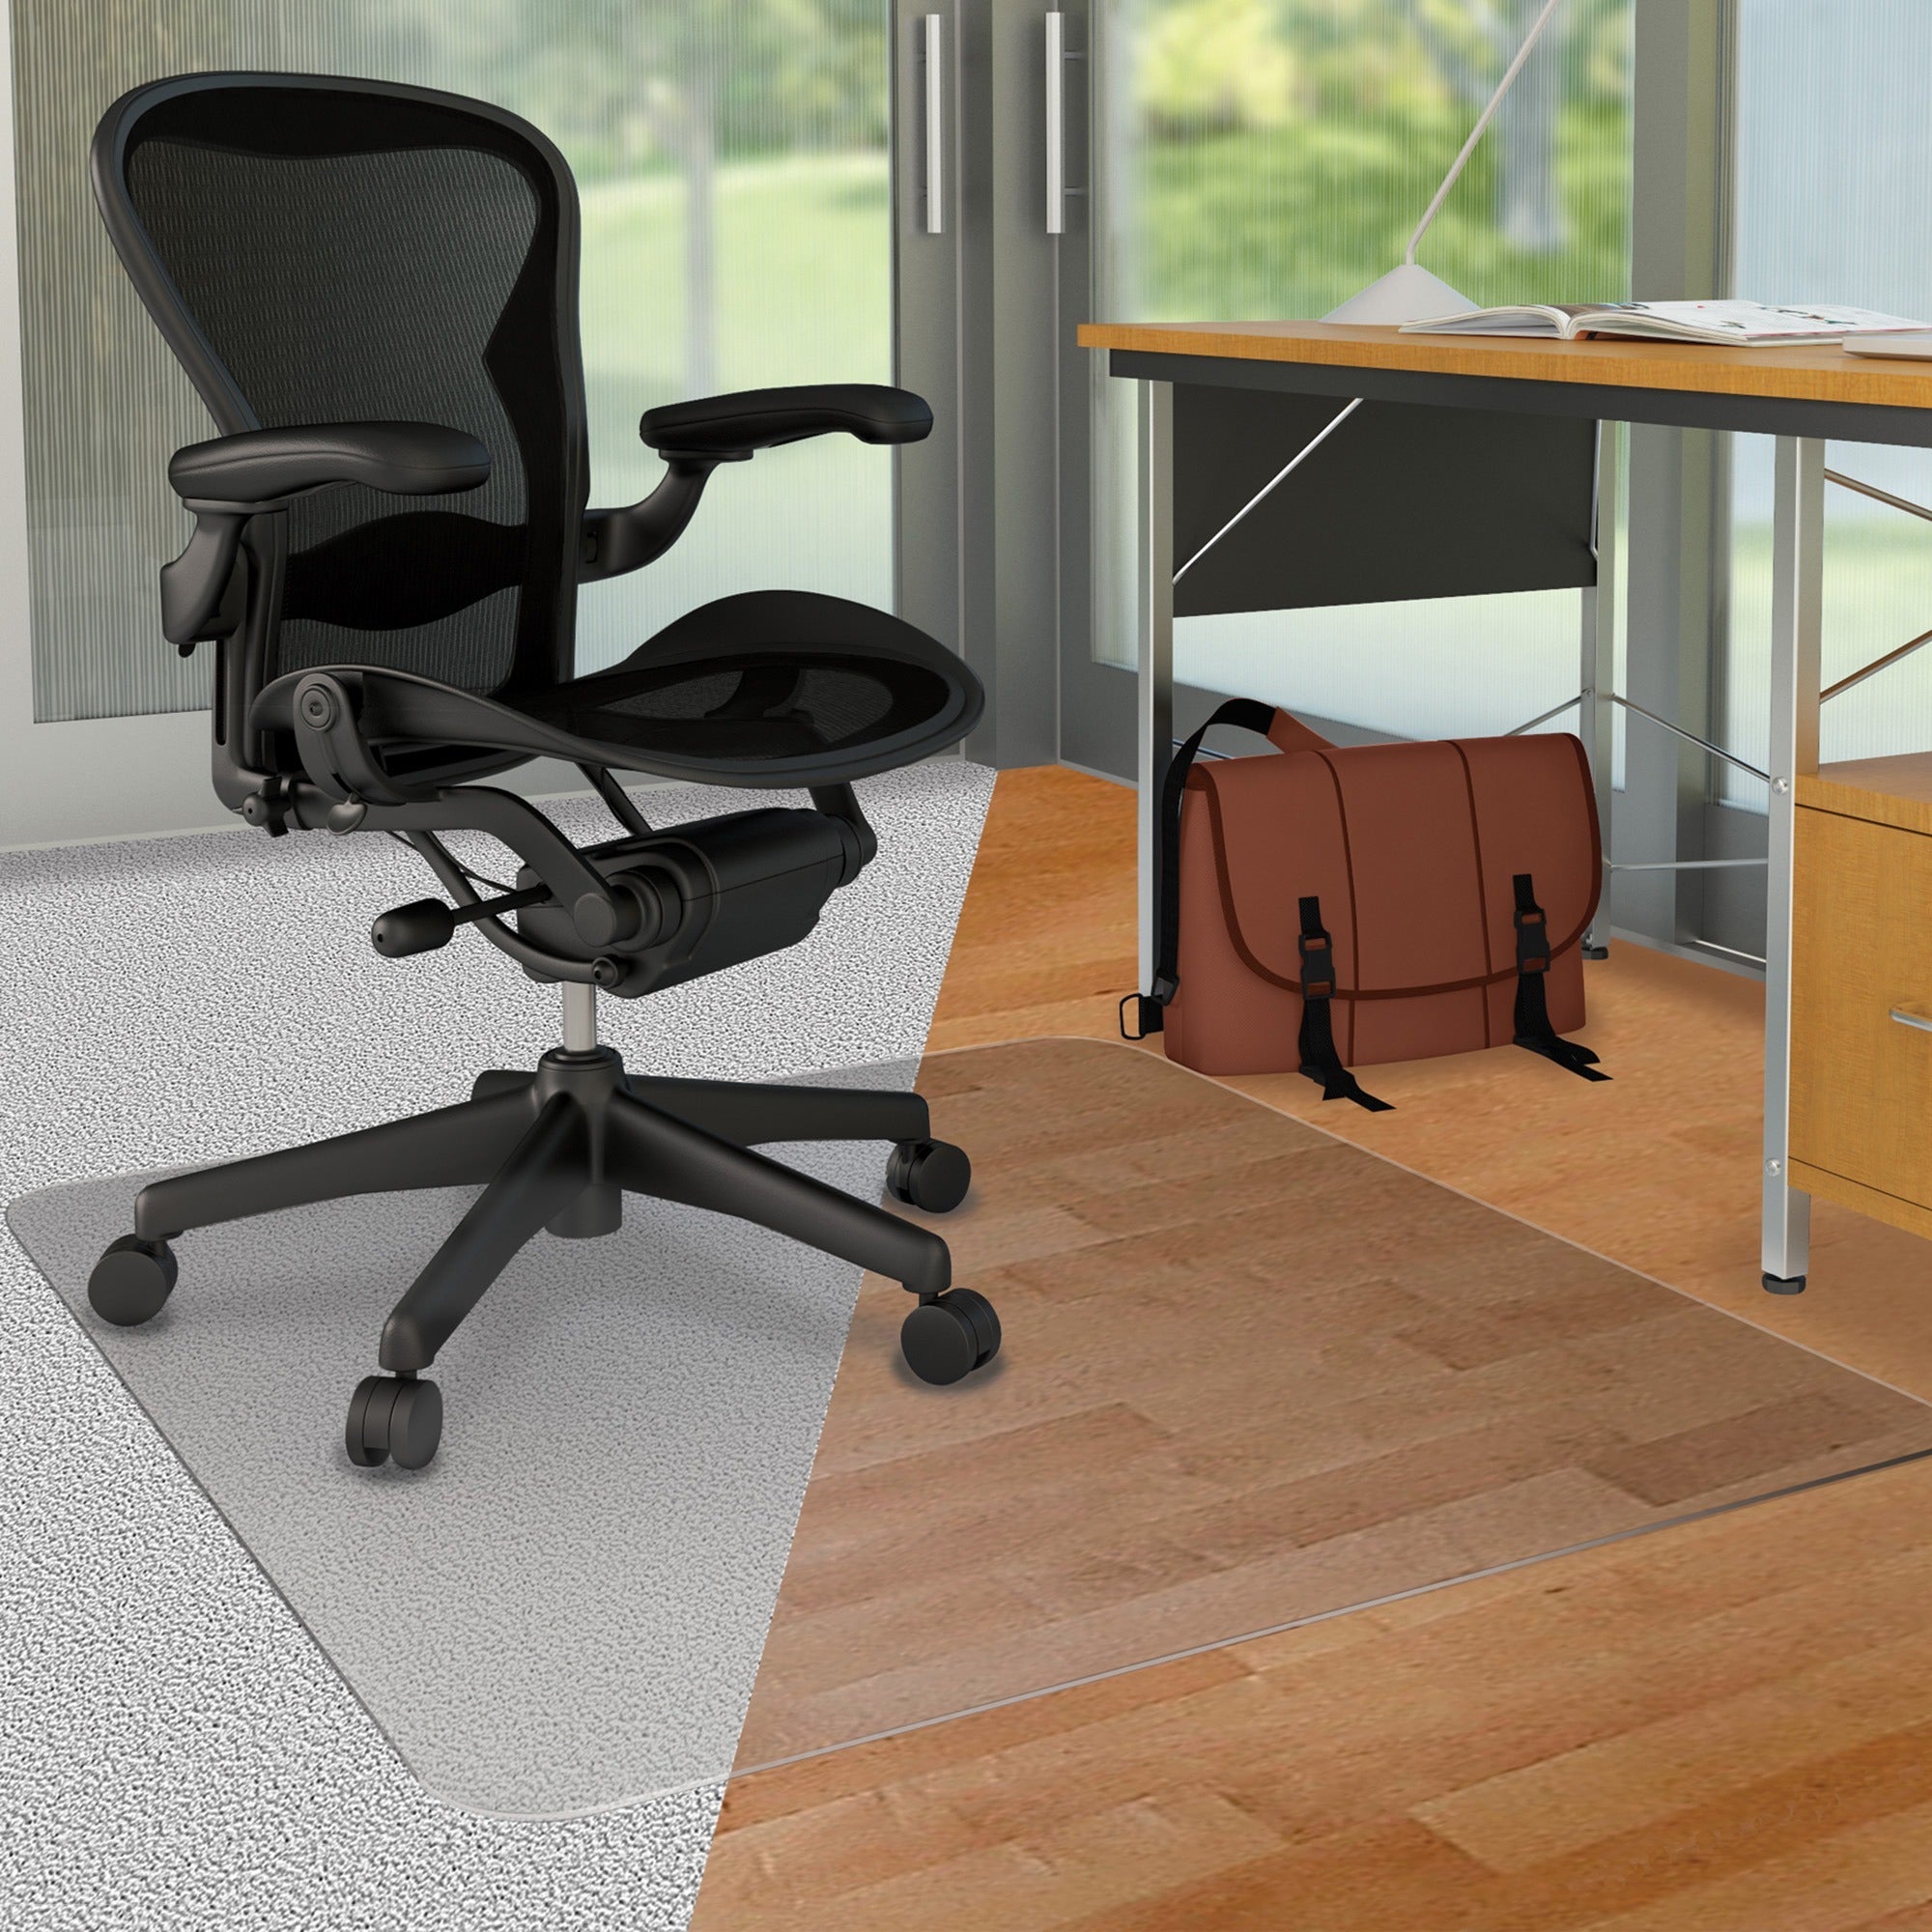 deflecto-duomat-multi-surface-chairmat-carpet-hard-floor-60-length-x-46-width-rectangular-classic-clear-1each_defcm23442fduo - 1